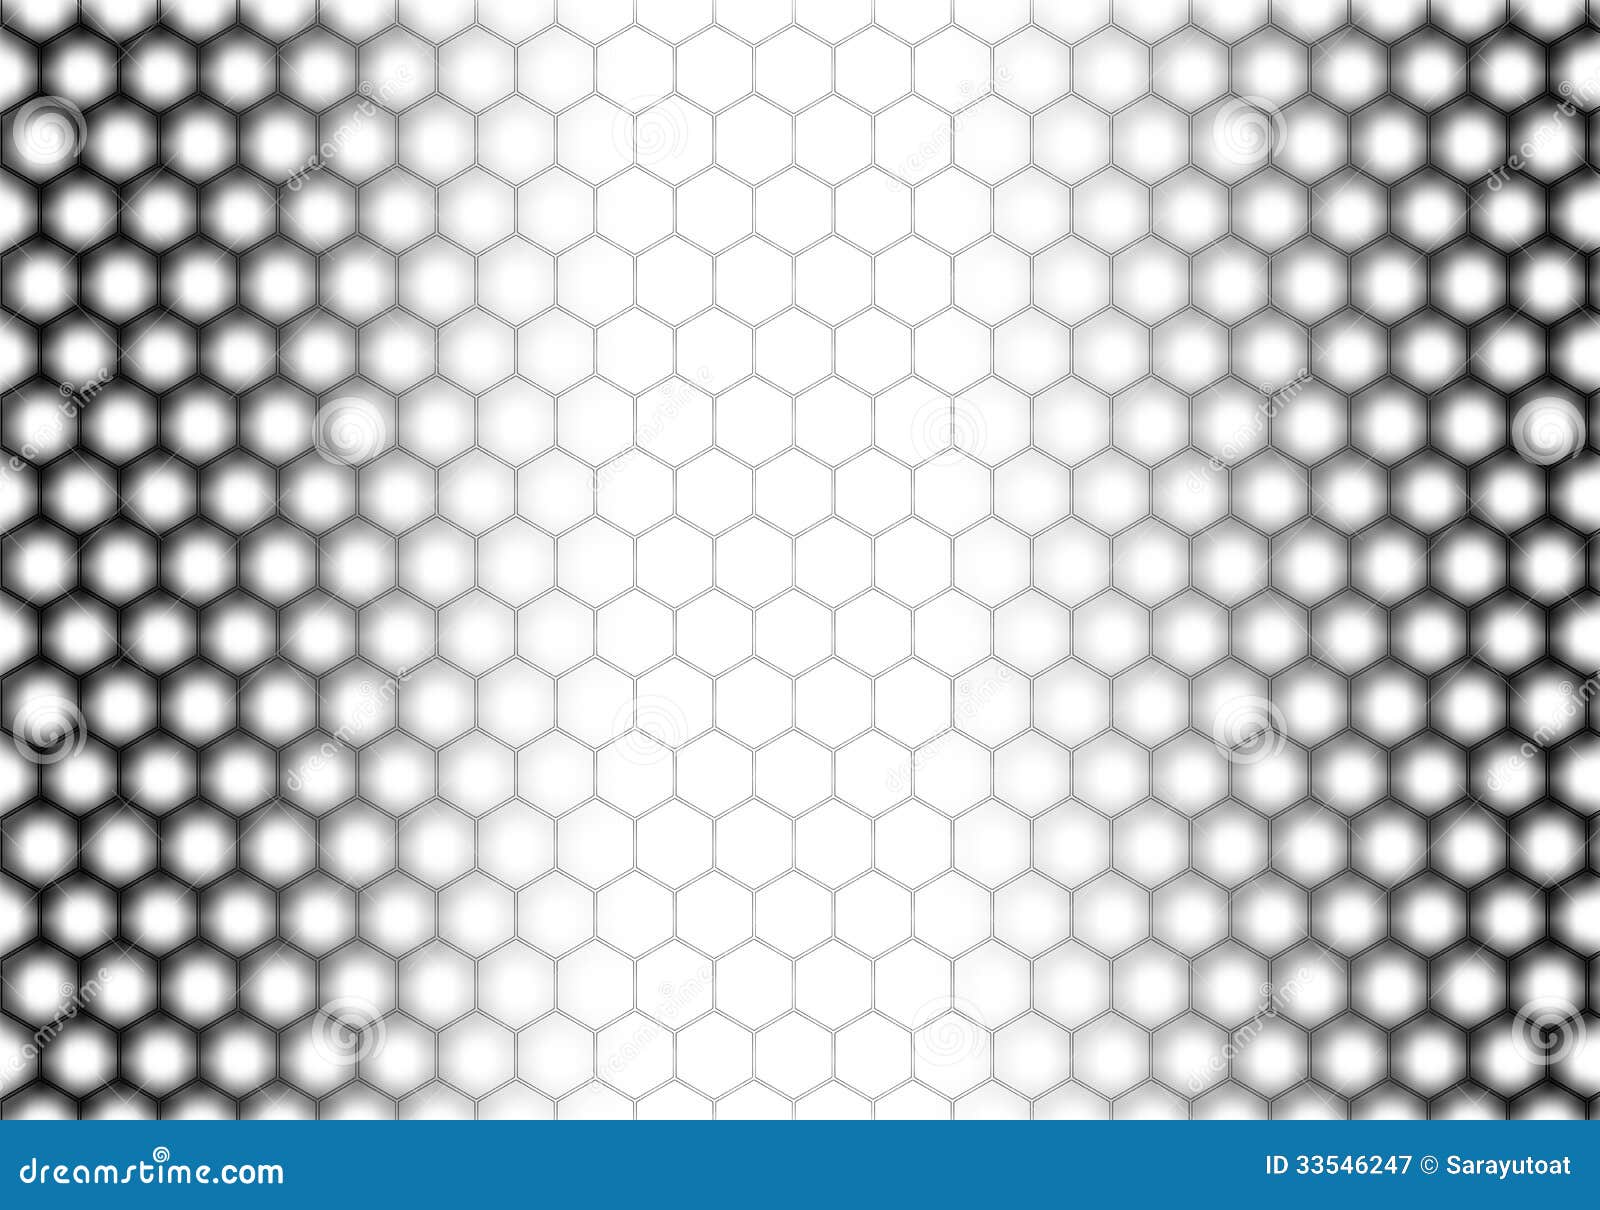 Honeycomb pattern stock illustration. Illustration of clip - 33546247